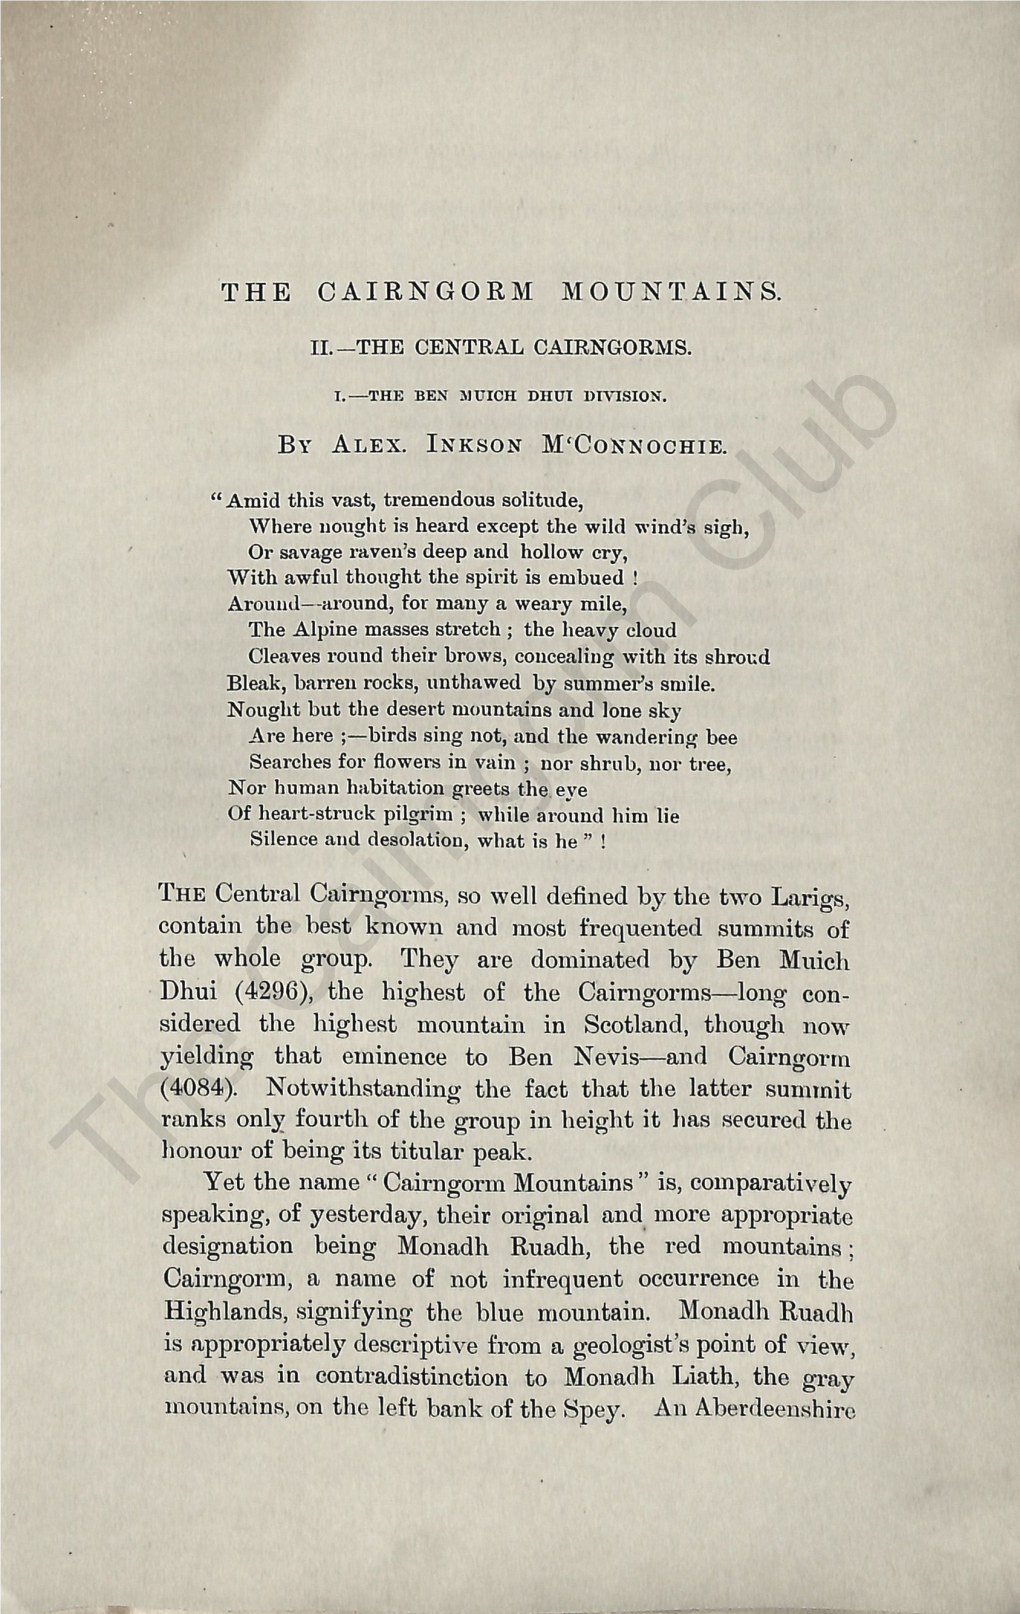 The Cairngorm Club Journal 005, 1895